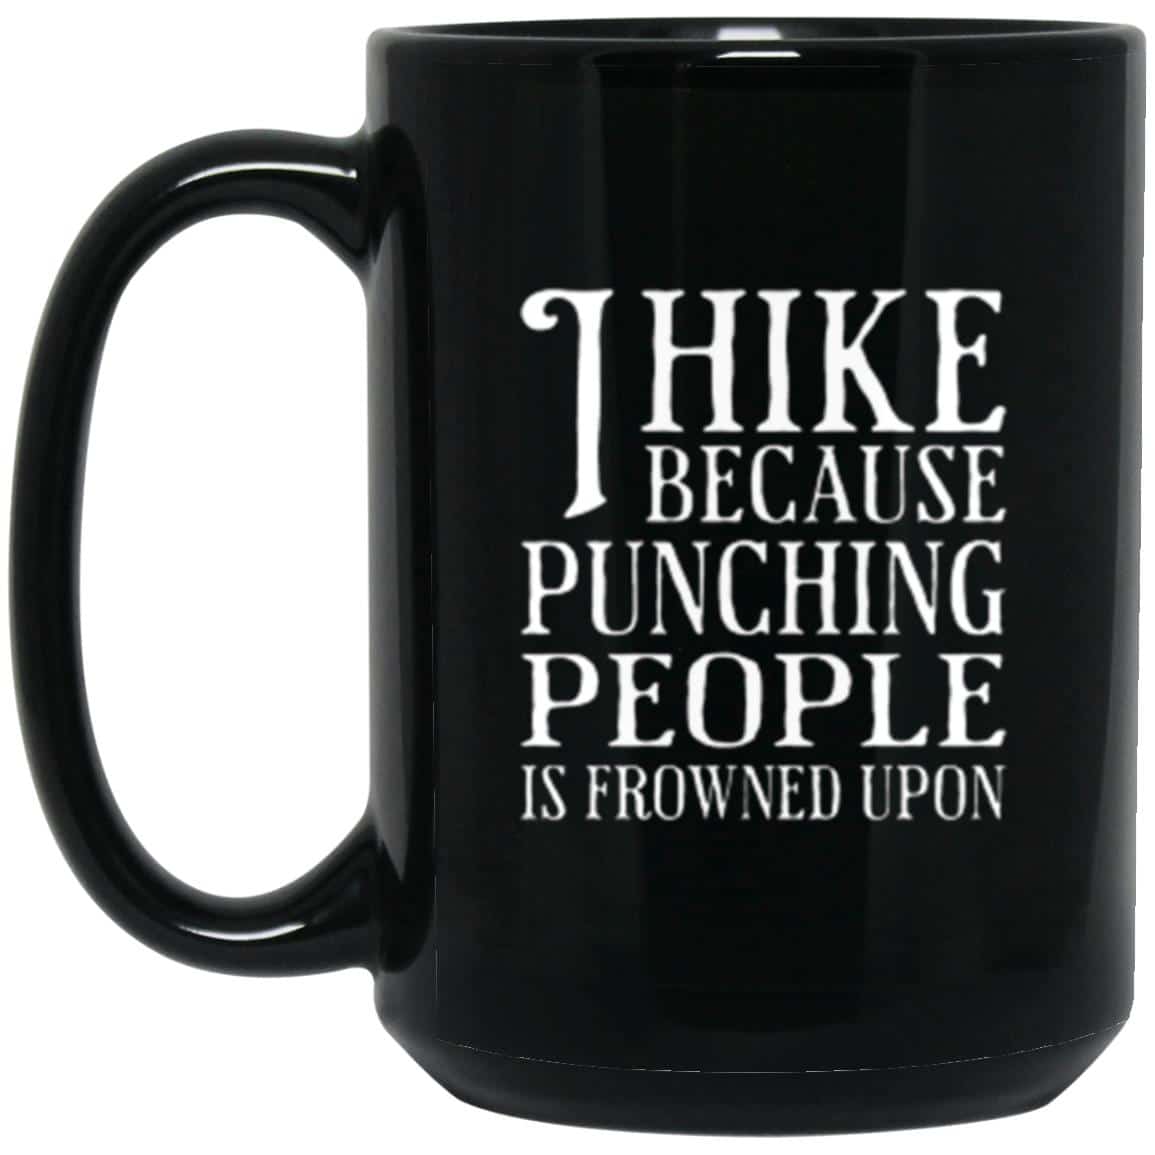 I Hike Because Punching People Is Frowned Upon  15 oz. Black Coffee Mug